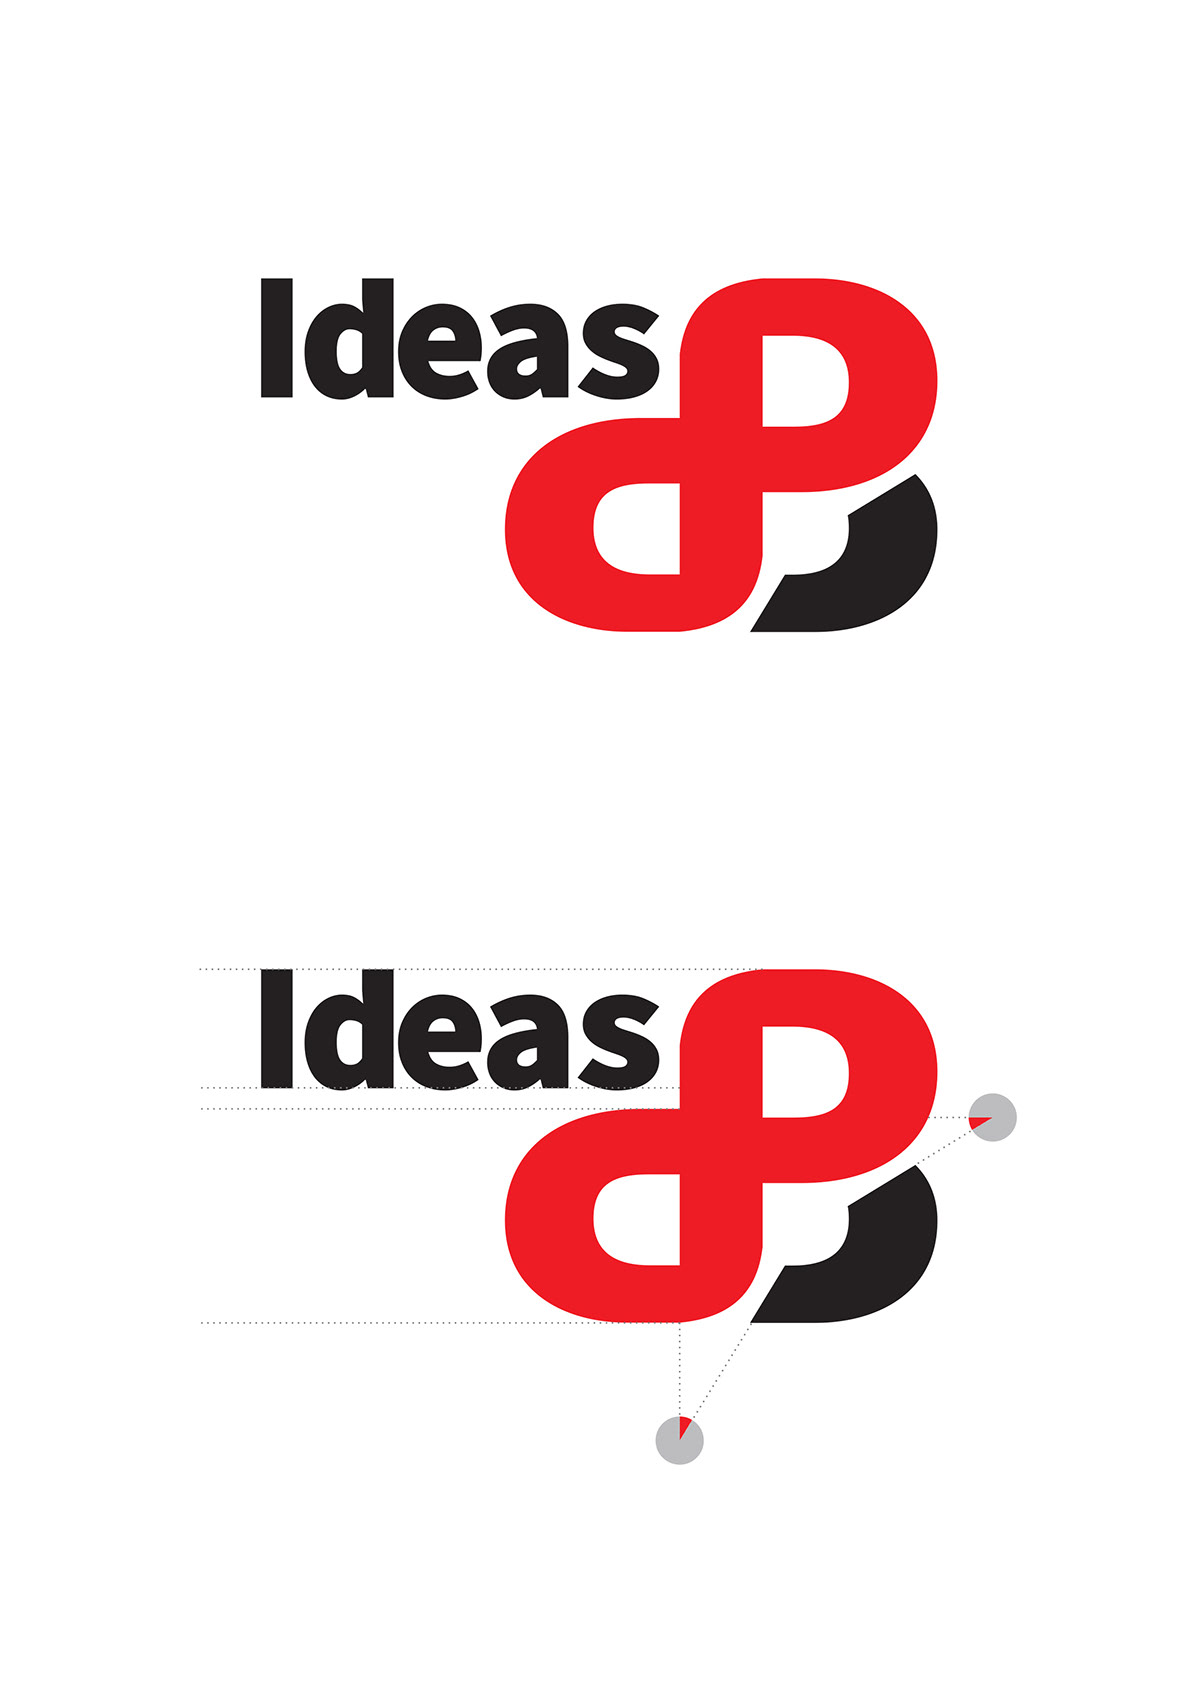 db Deutsche Bahn labs innovation infinity logo